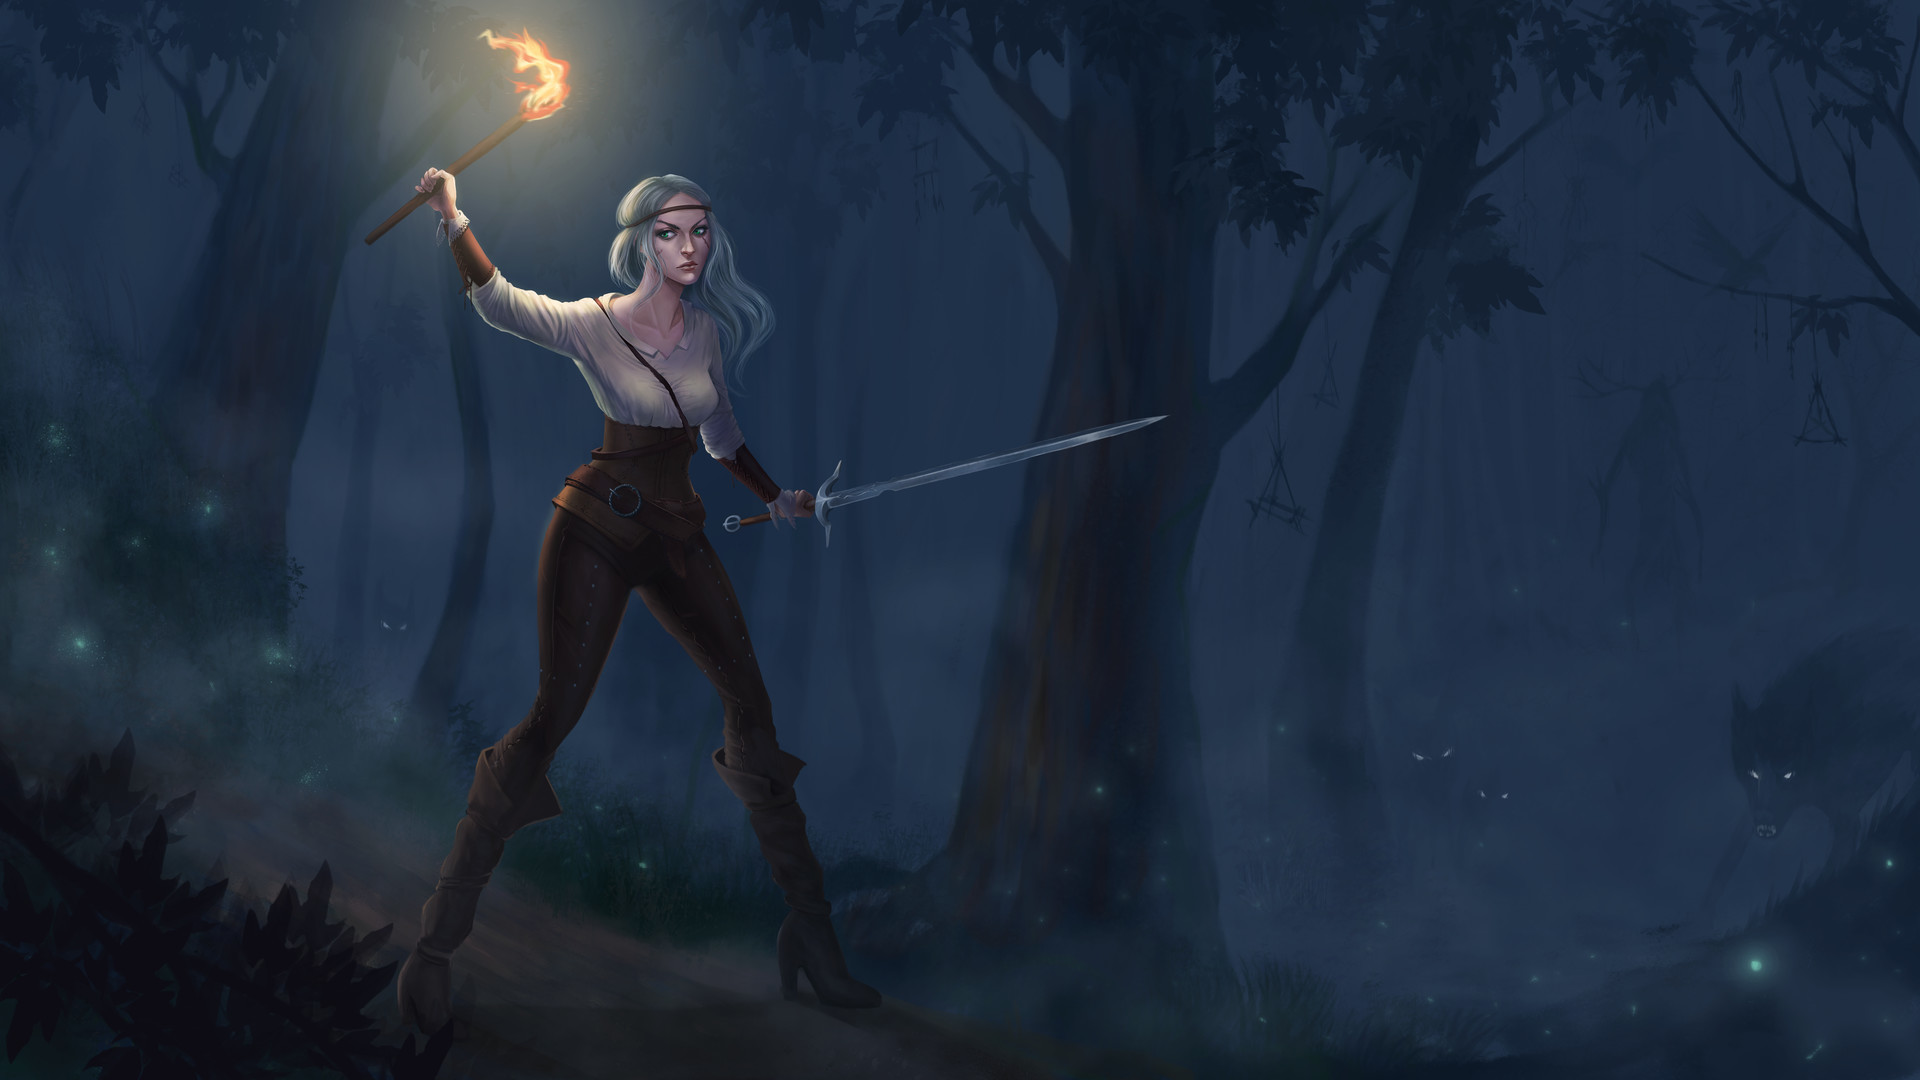 General 1920x1080 Cirilla Fiona Elen Riannon The Witcher 3: Wild Hunt artwork fantasy art fantasy girl The Witcher fan art digital art video games